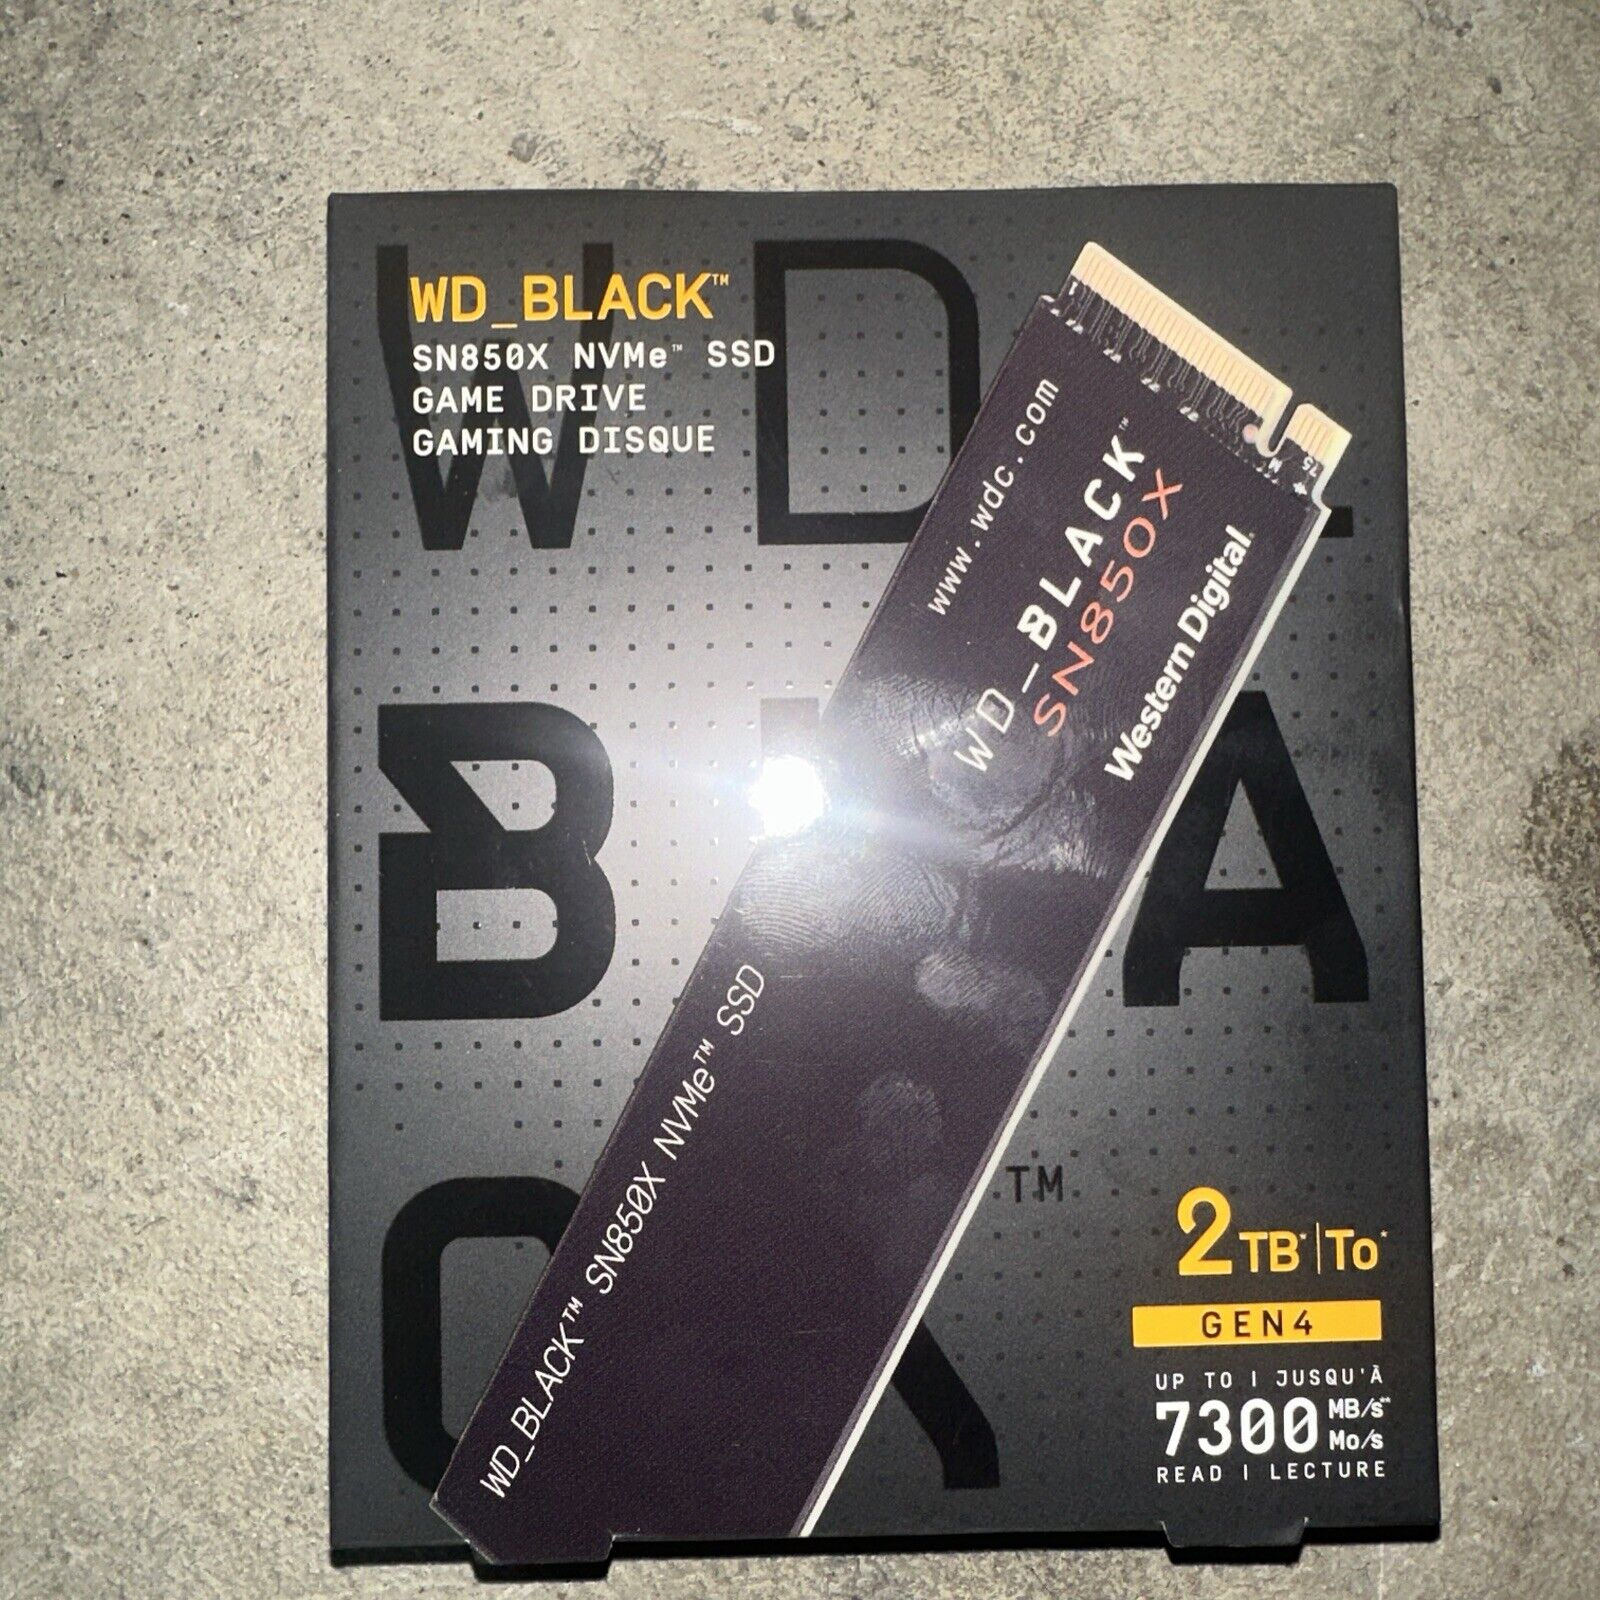 WD_BLACK 2TB SN850X NVMe Internal Gaming SSD Solid State Drives-Gen4 PCIe, M.2